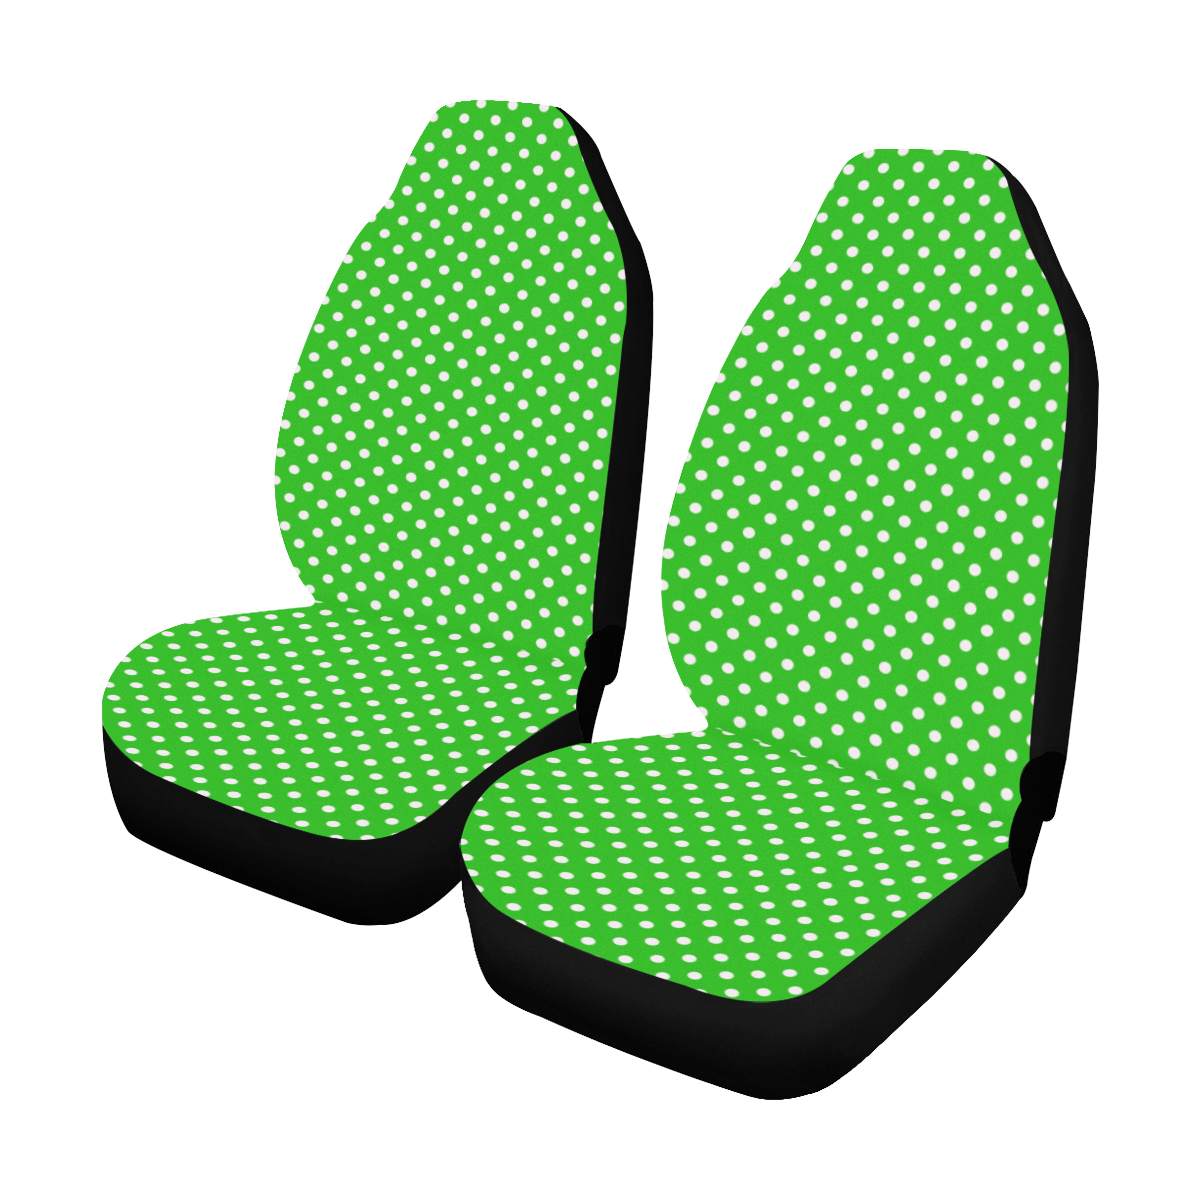 Green polka dots Car Seat Covers (Set of 2)